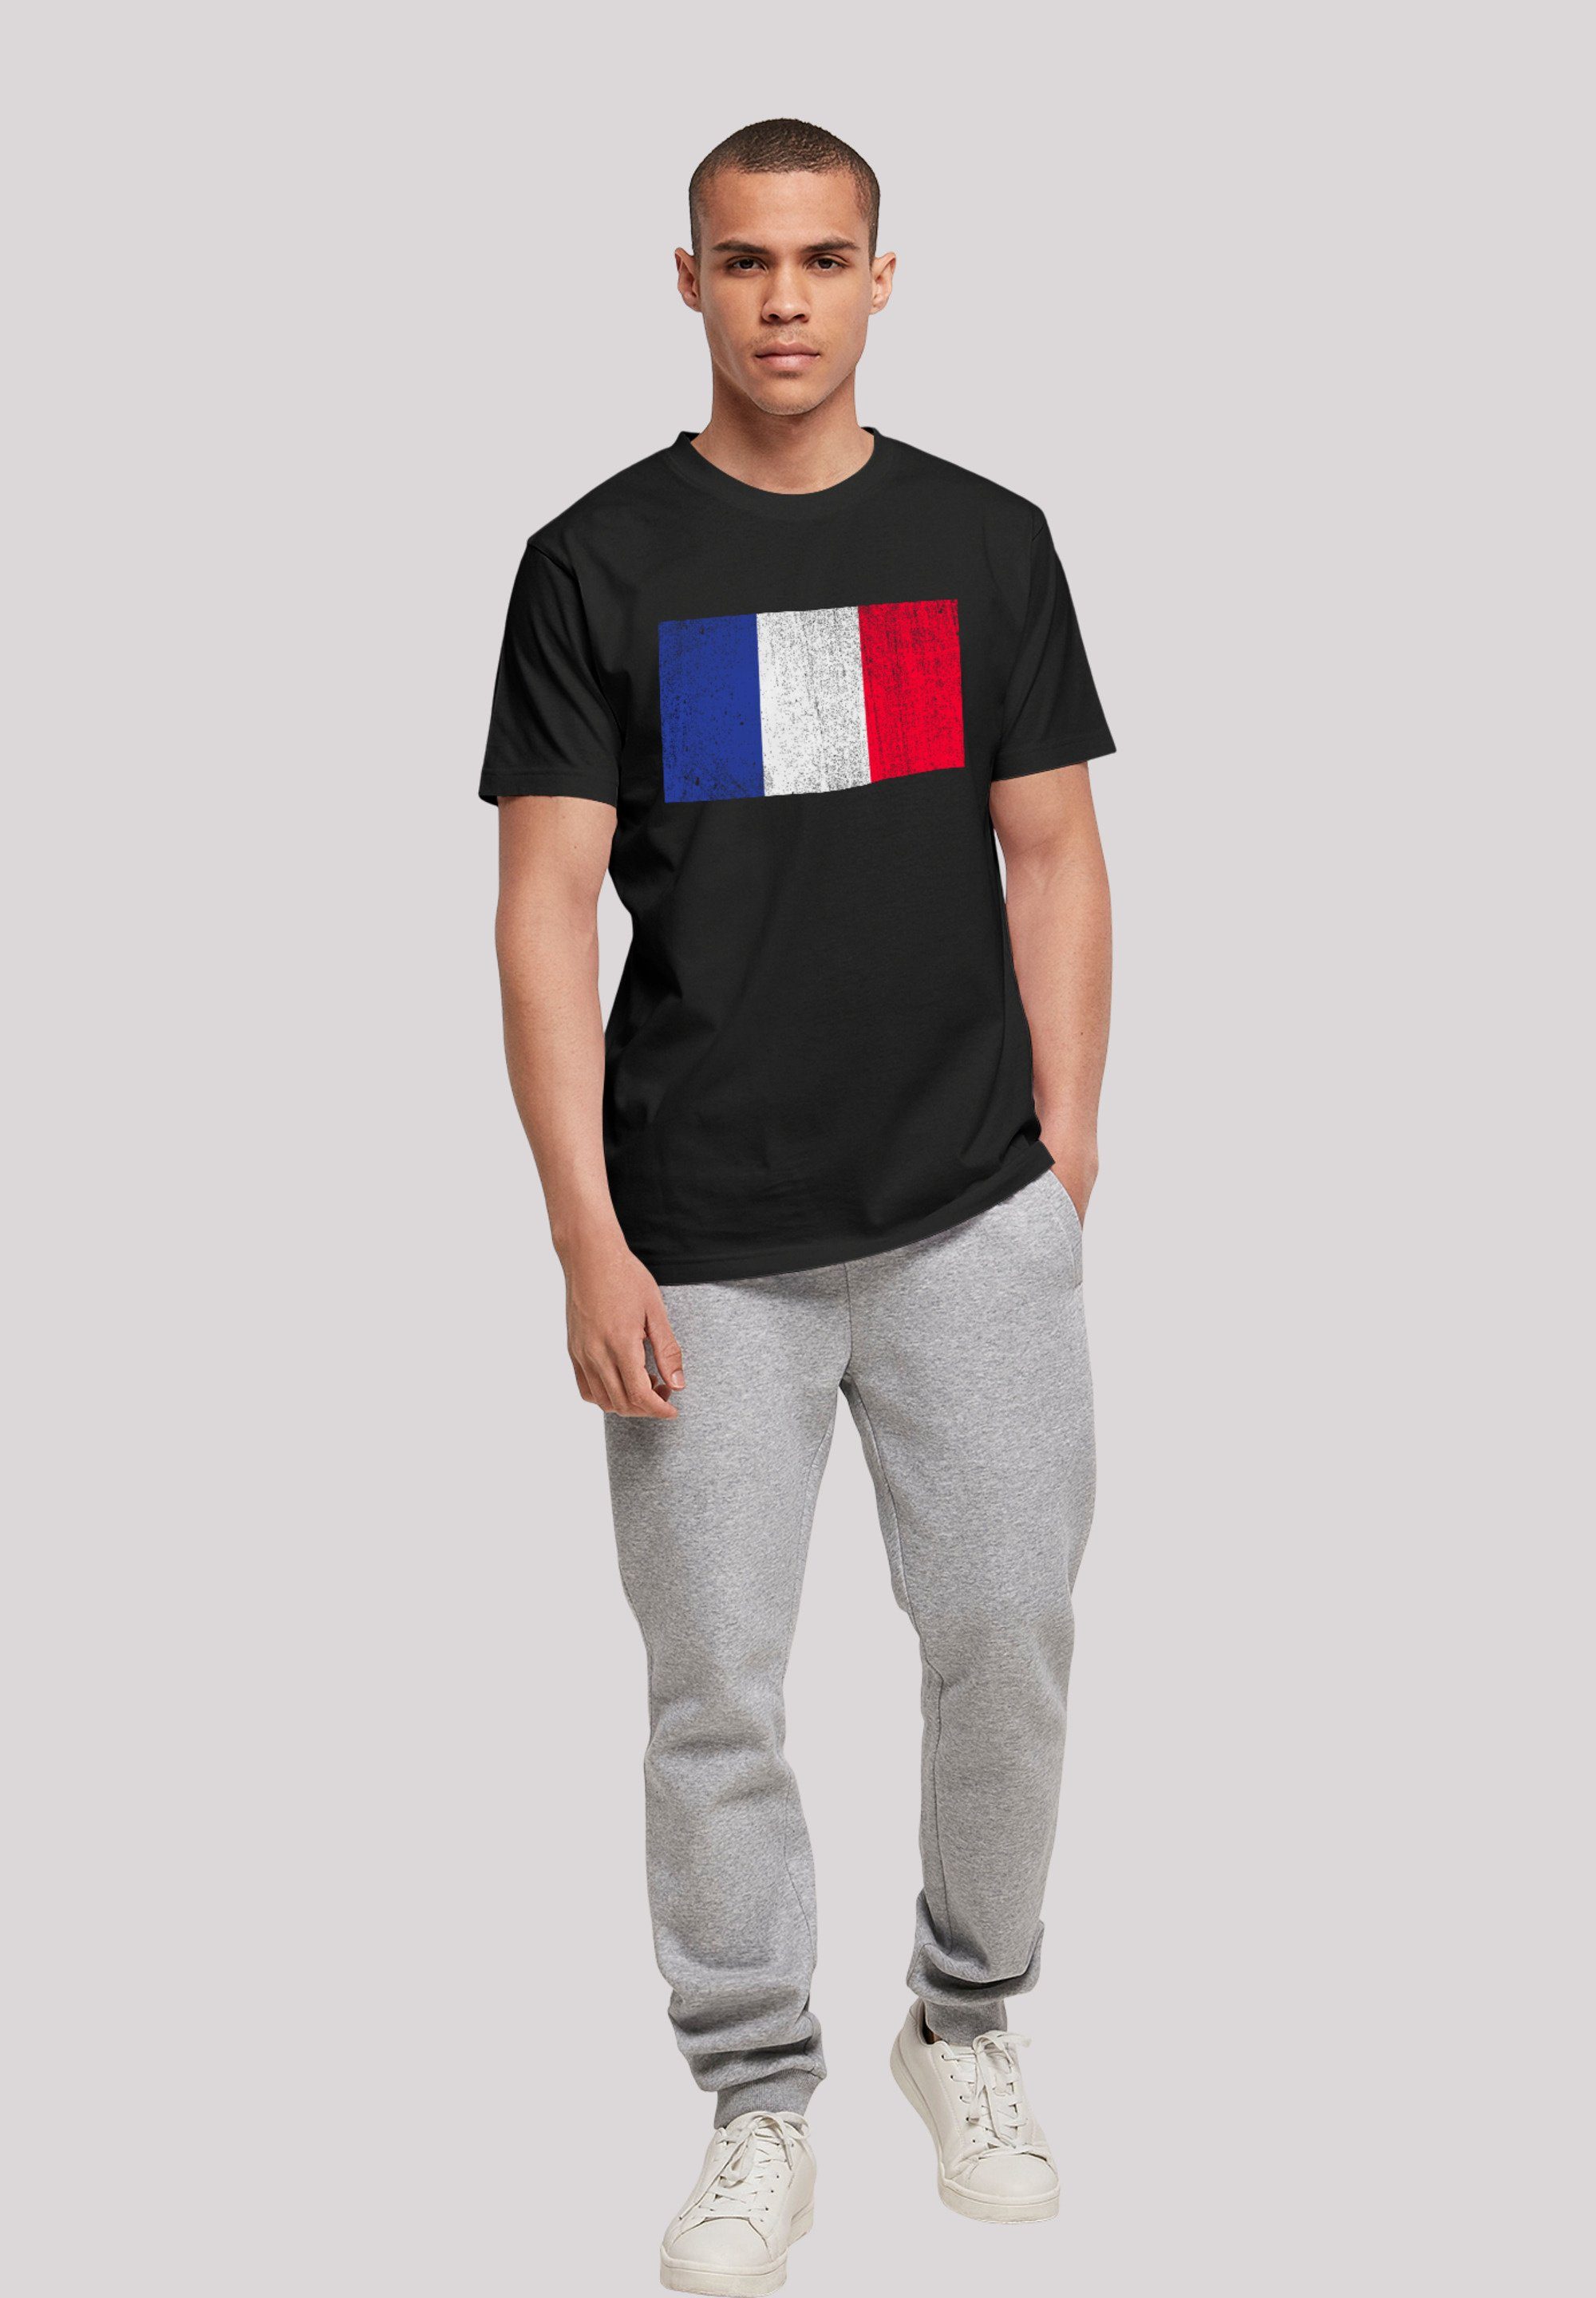 F4NT4STIC T-Shirt Flagge schwarz Frankreich distressed France Print